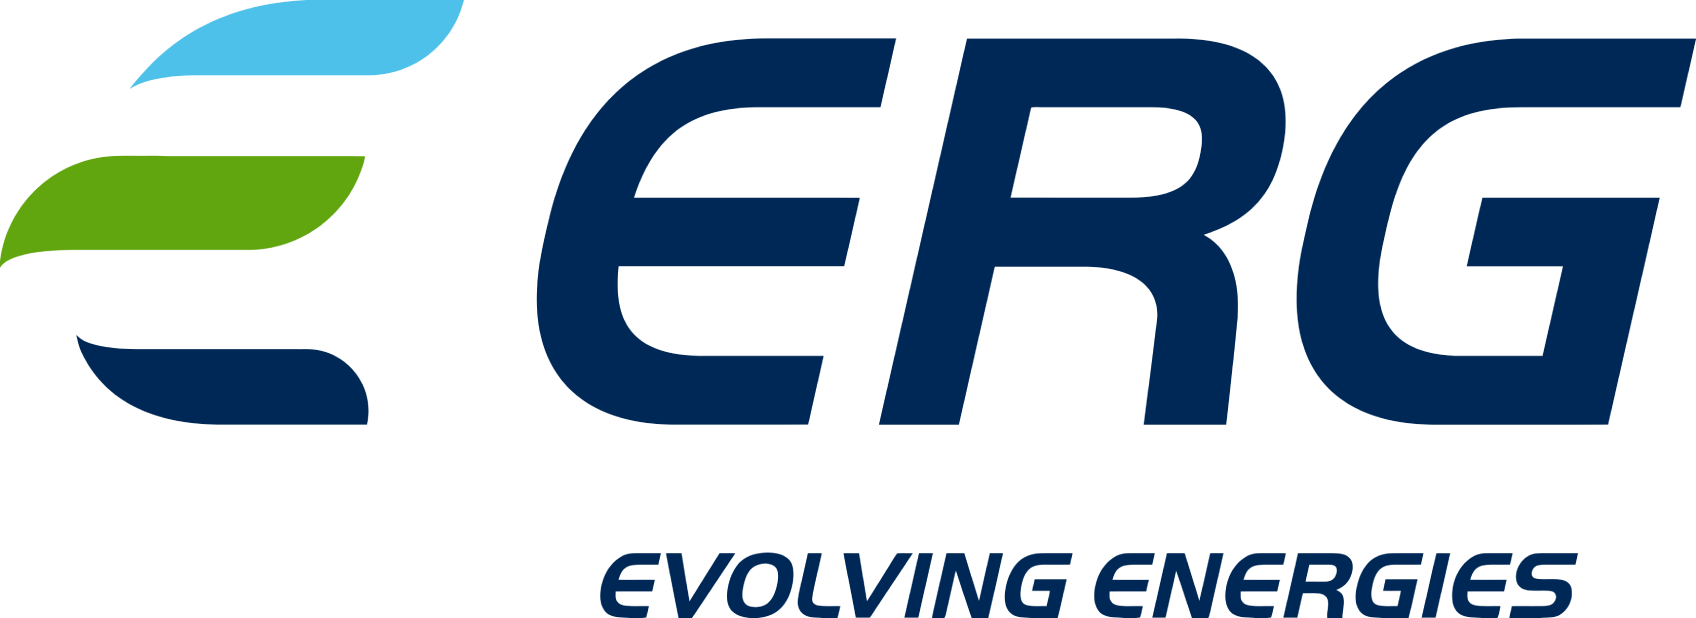 ERG logo large (transparent PNG)